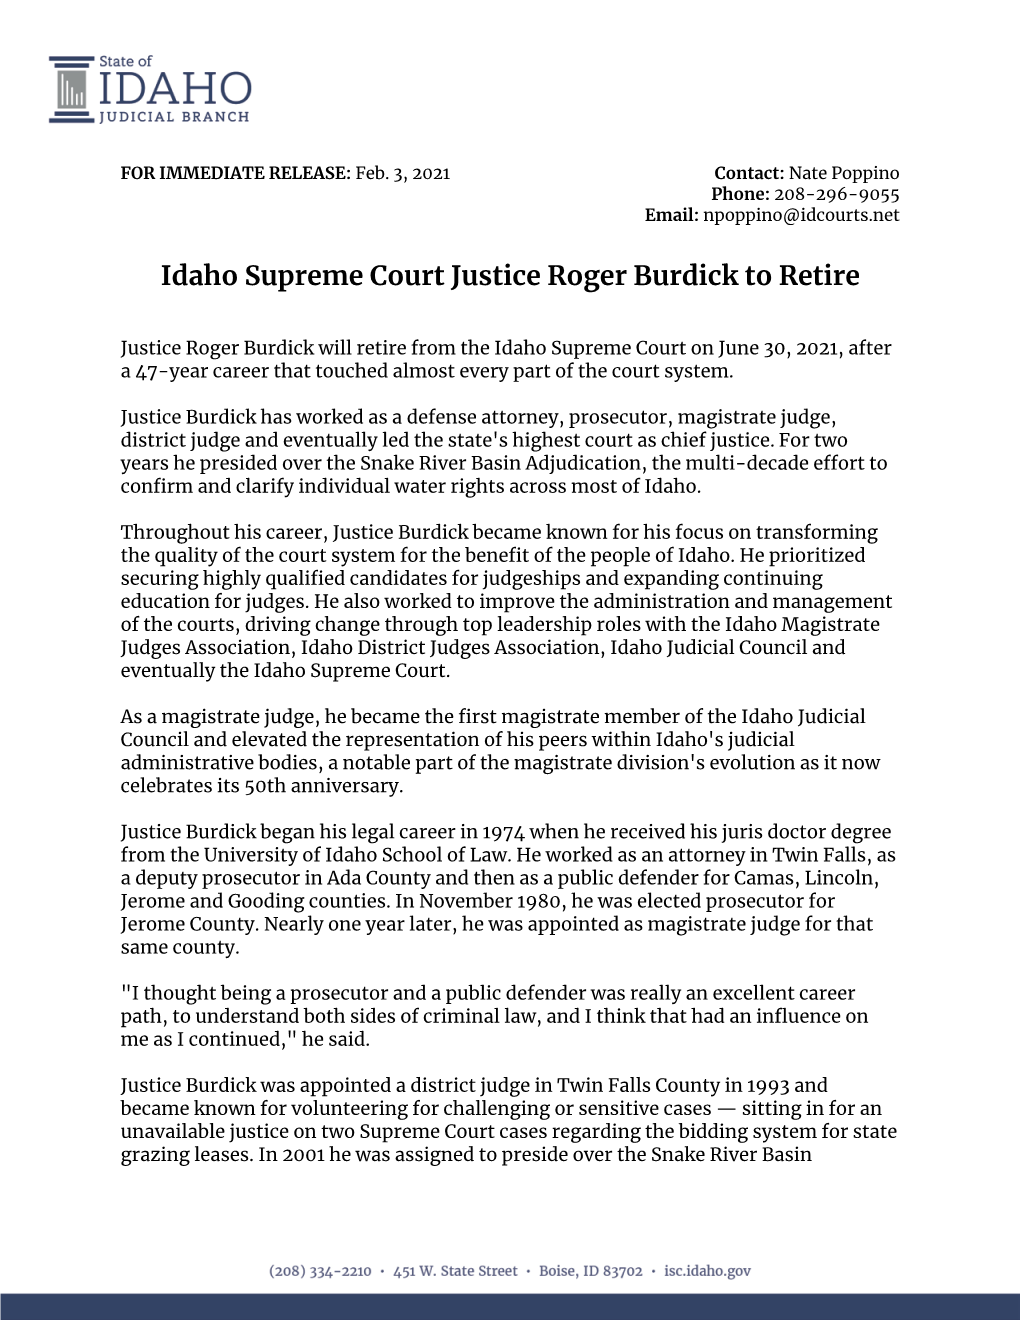 Idaho Supreme Court Justice Roger Burdick to Retire